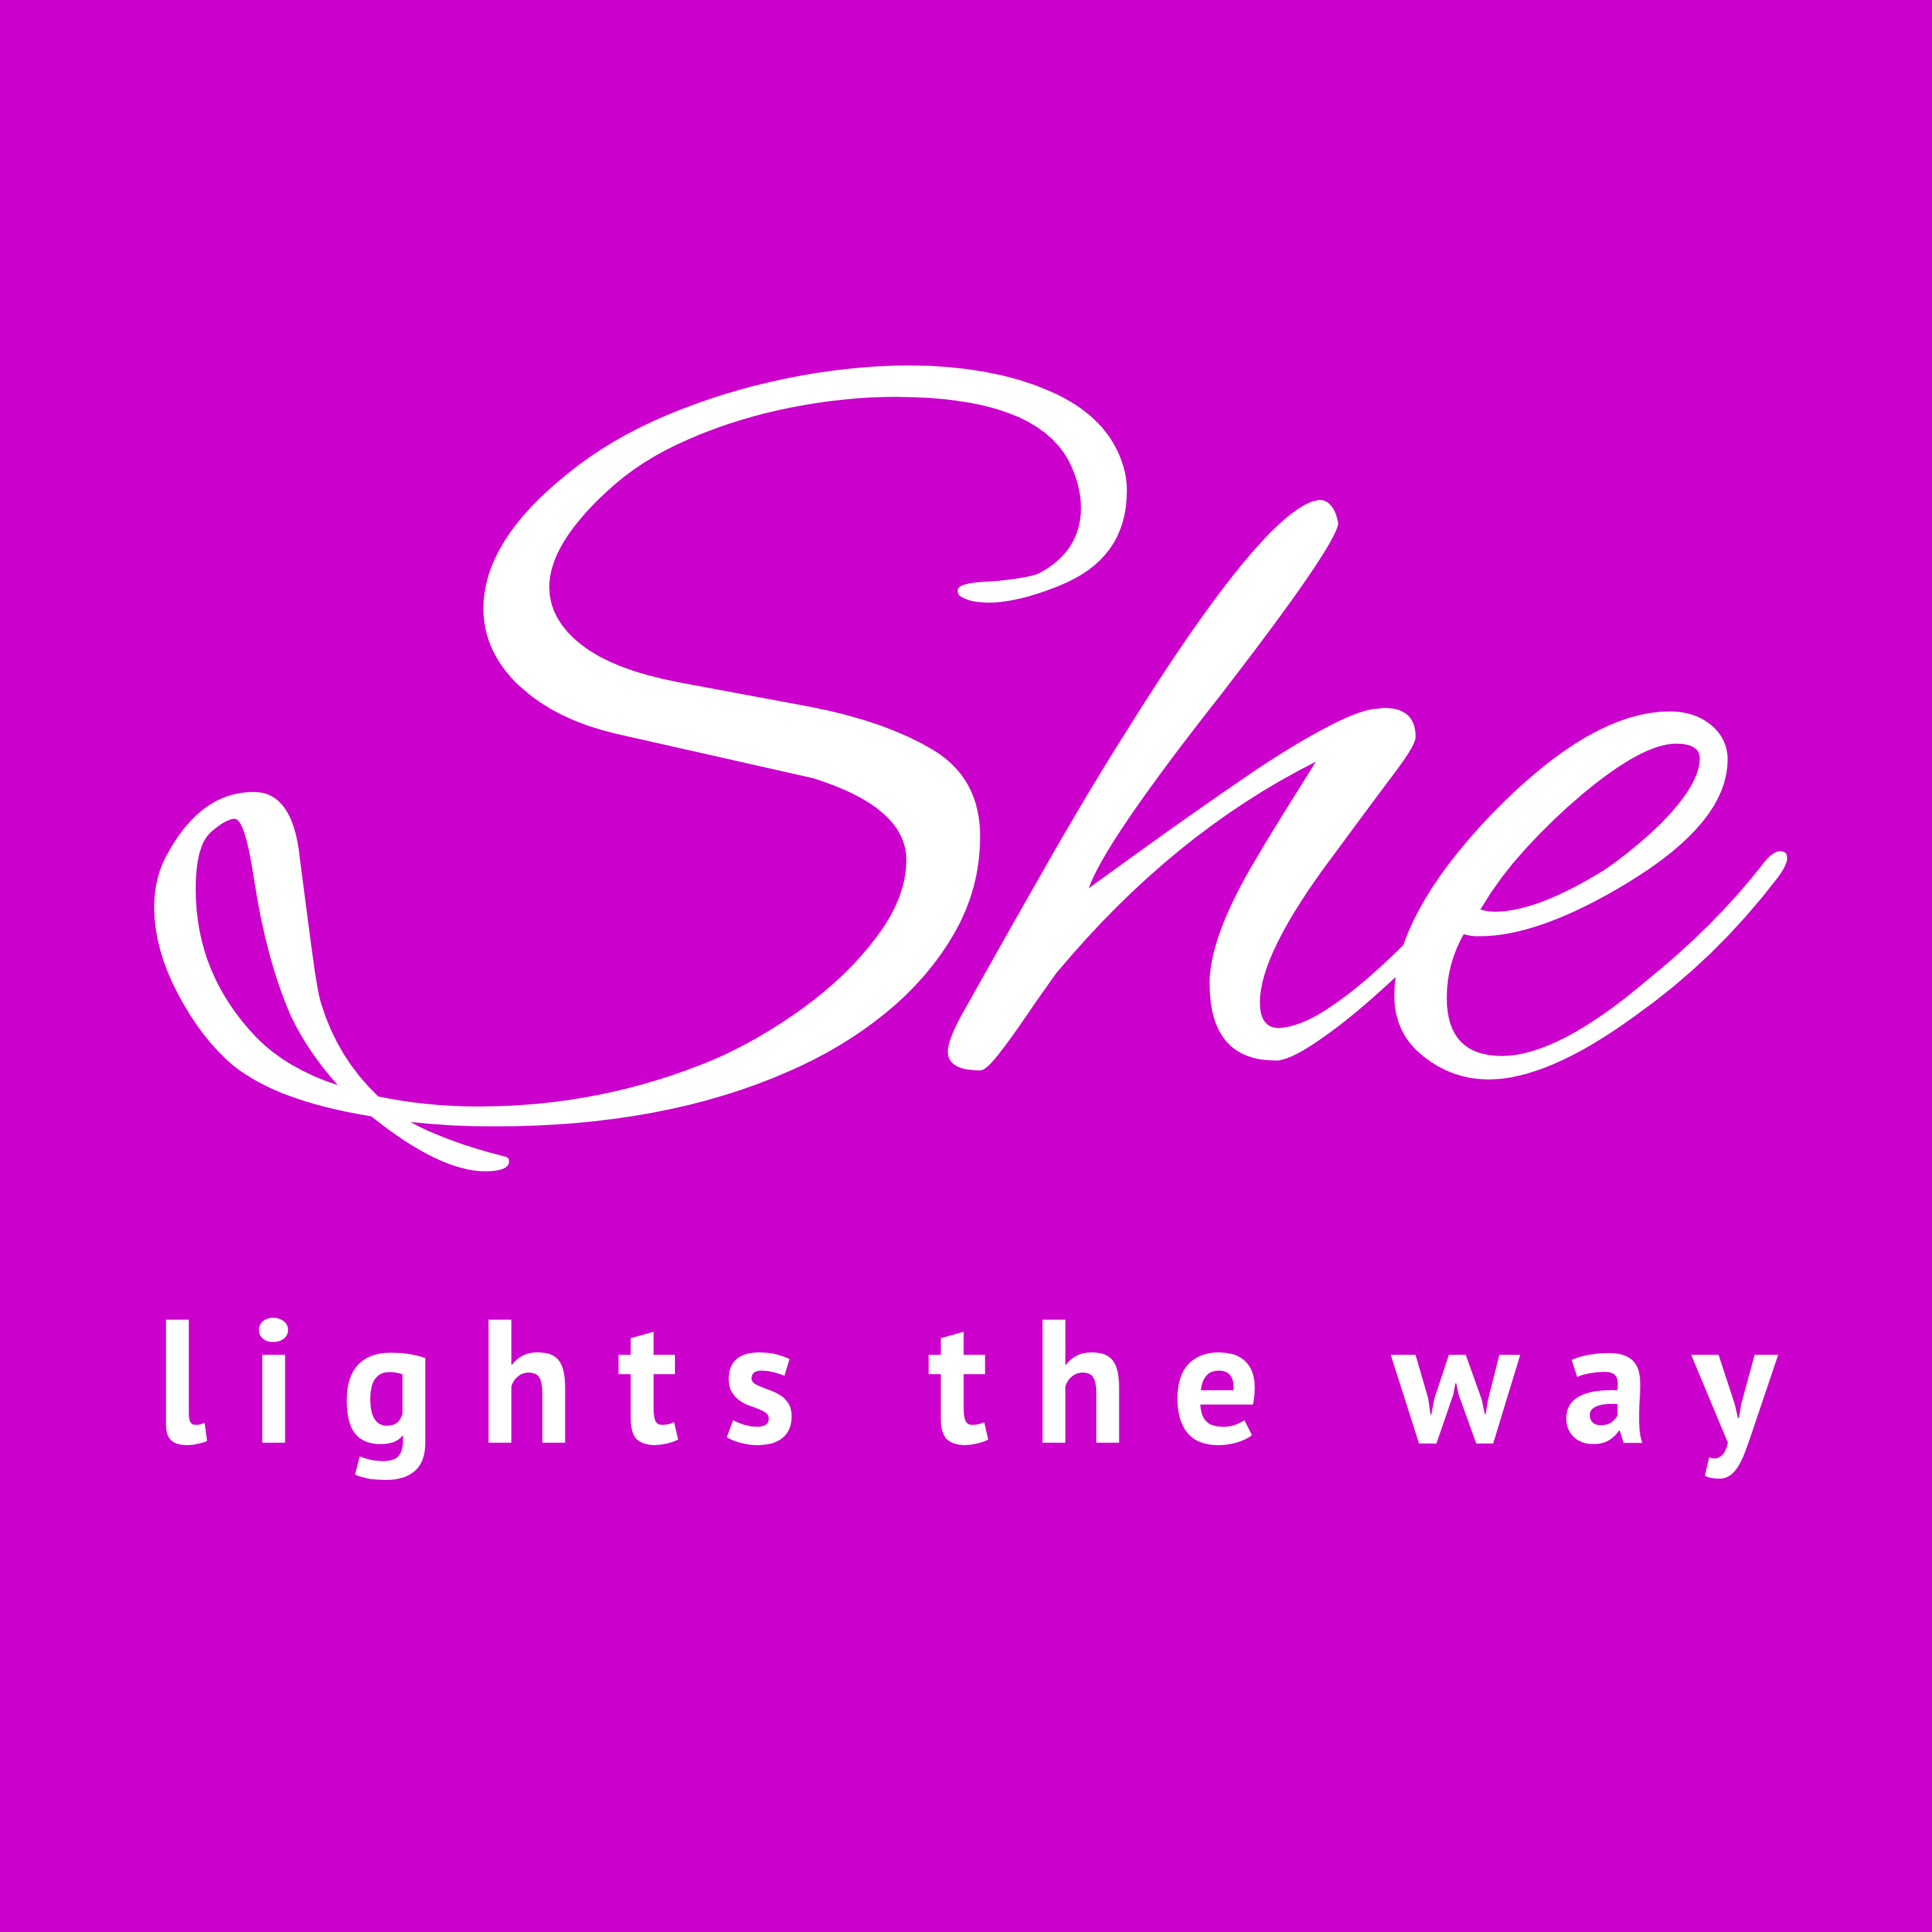 She Lights the Way